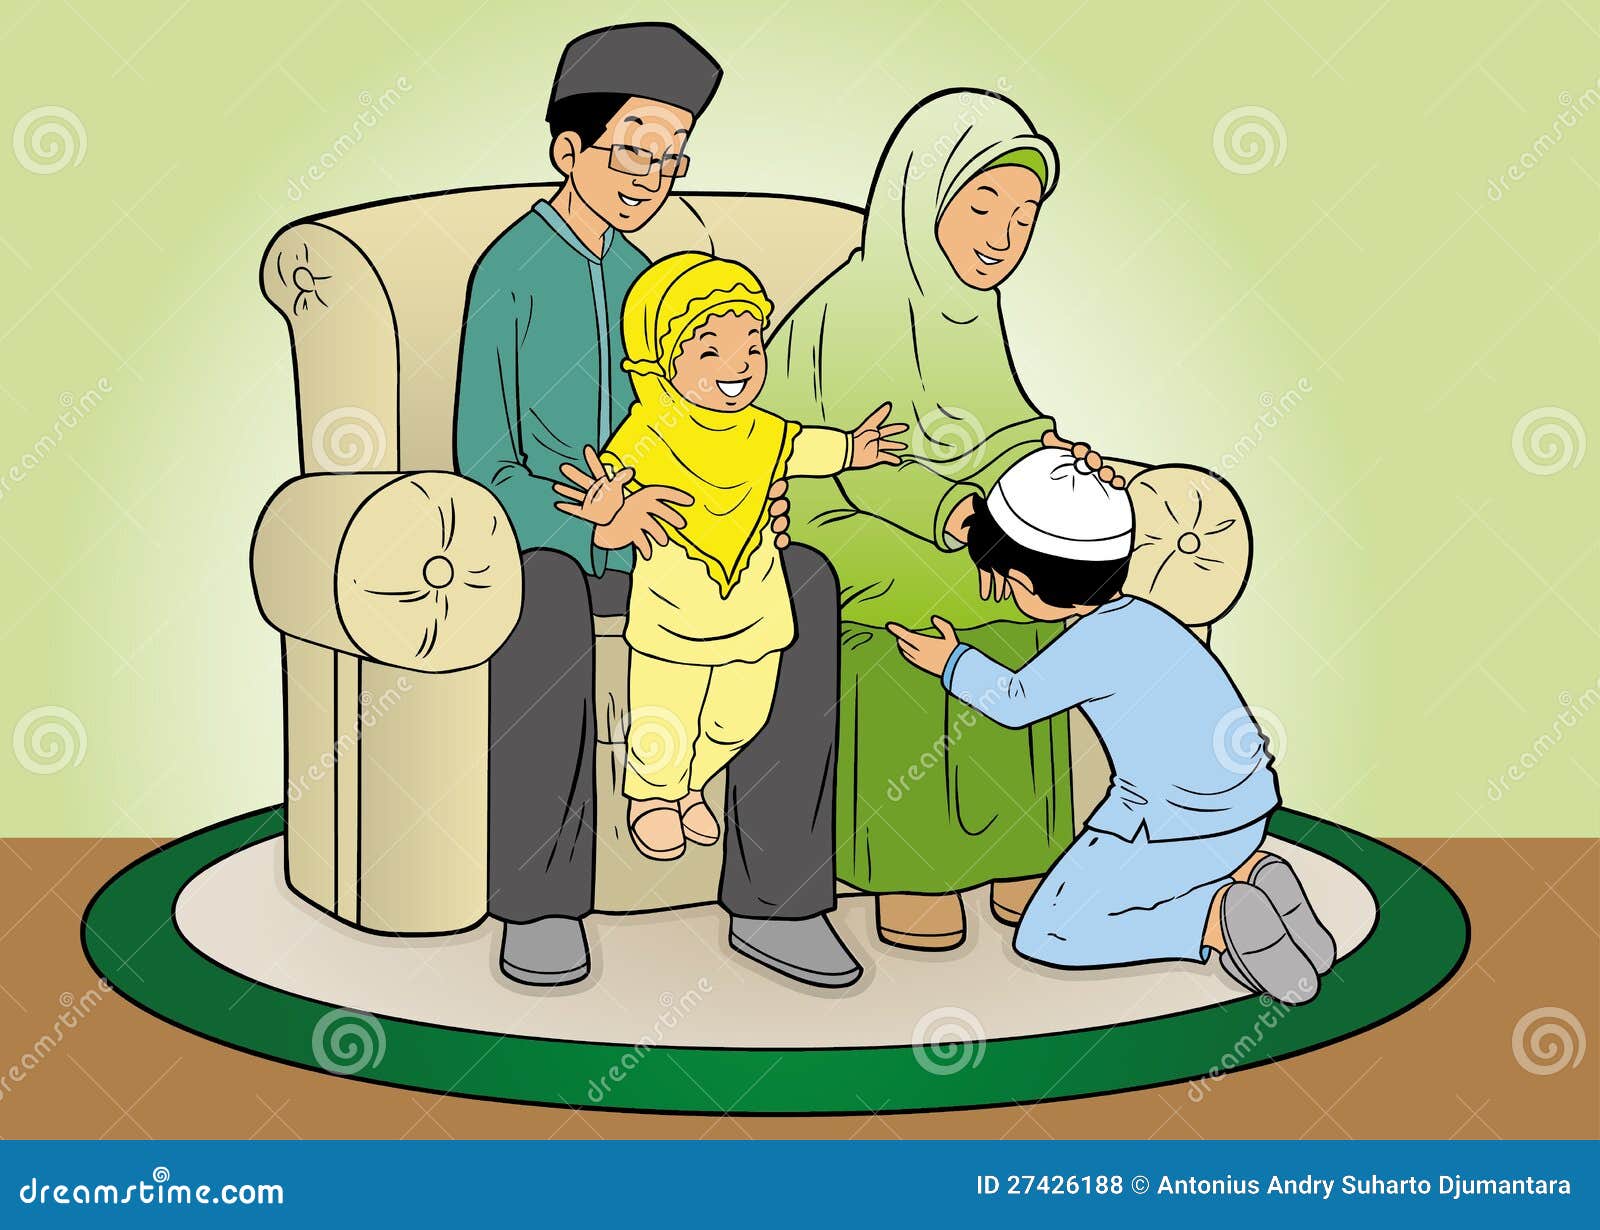 clipart muslim family - photo #25